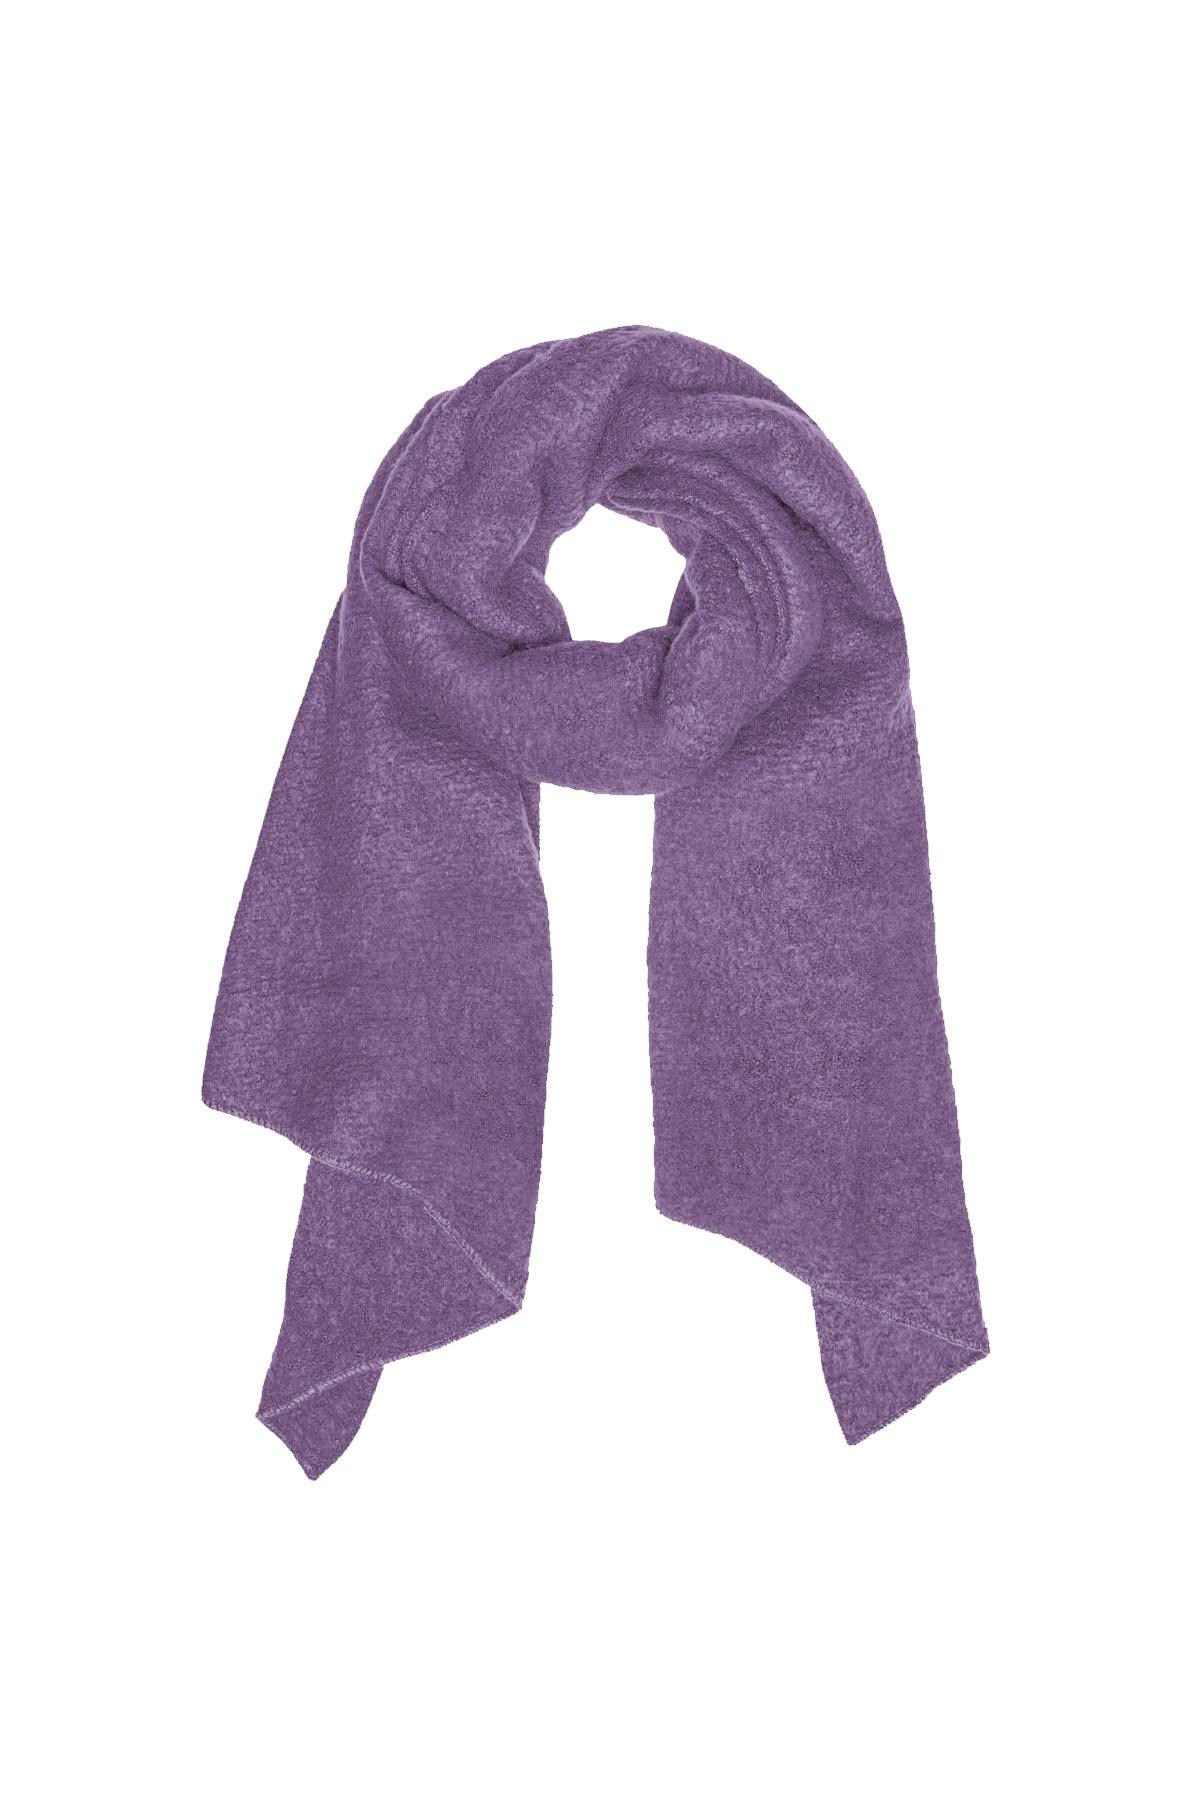 Single-colored winter scarf - purple h5 